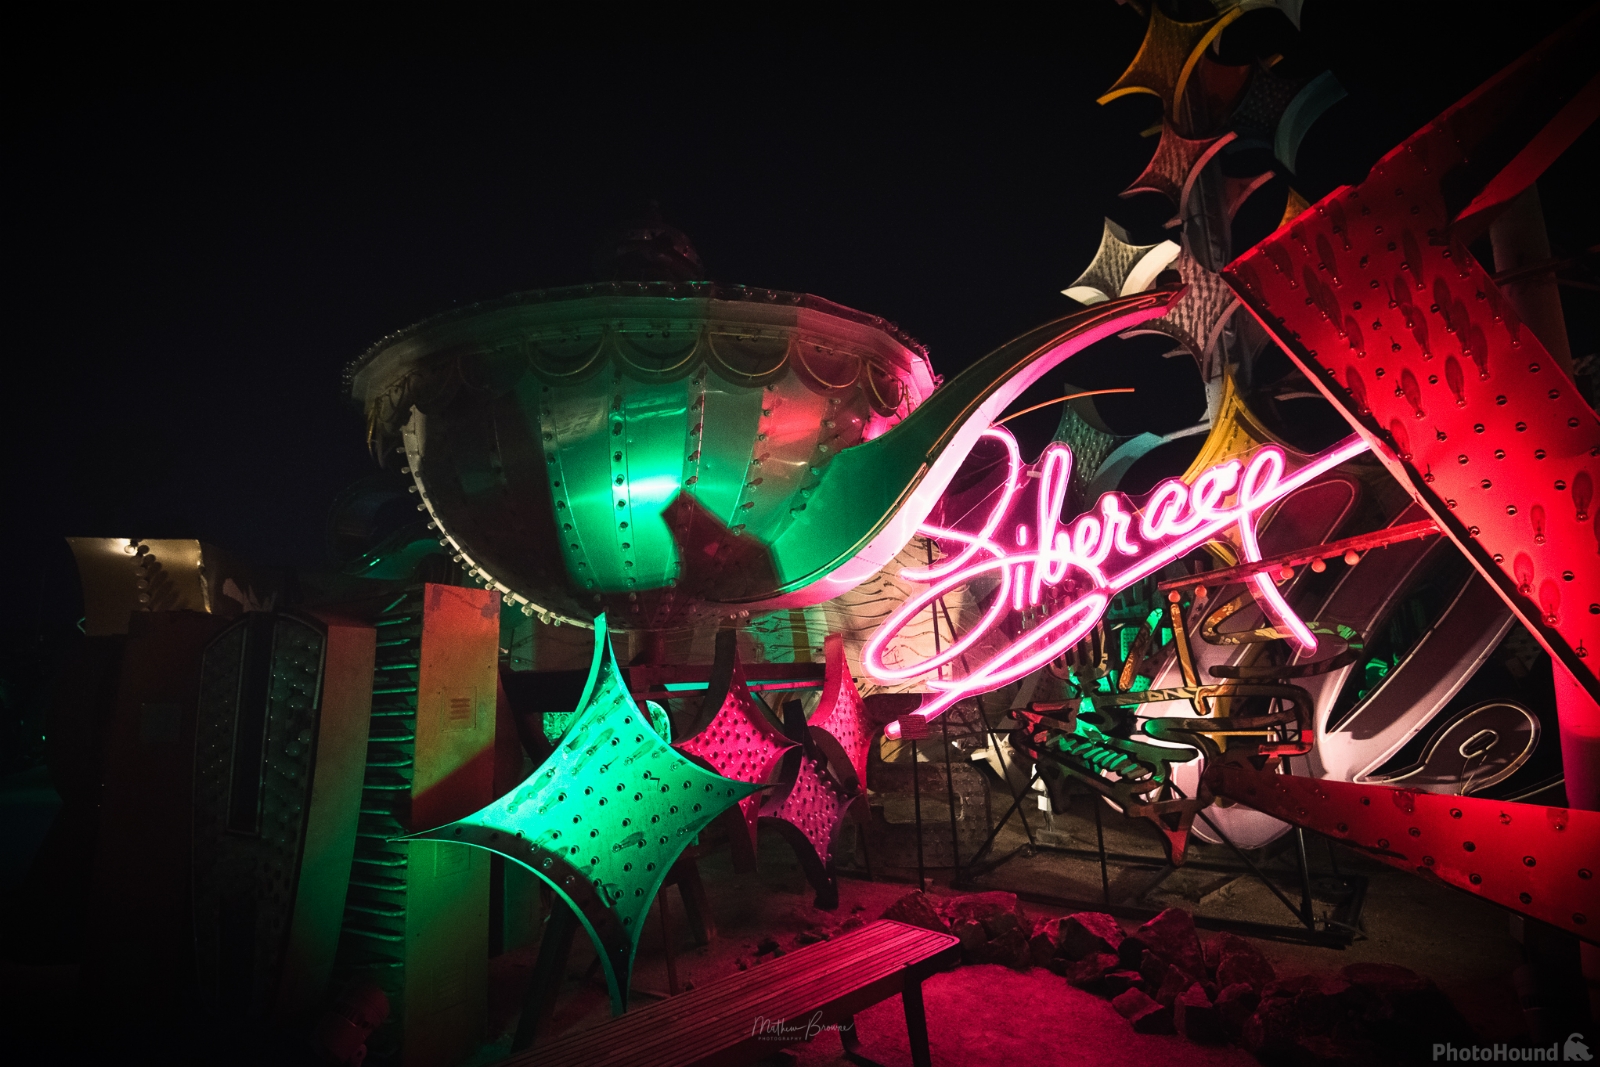 Image of Las Vegas Neon Museum by Mathew Browne